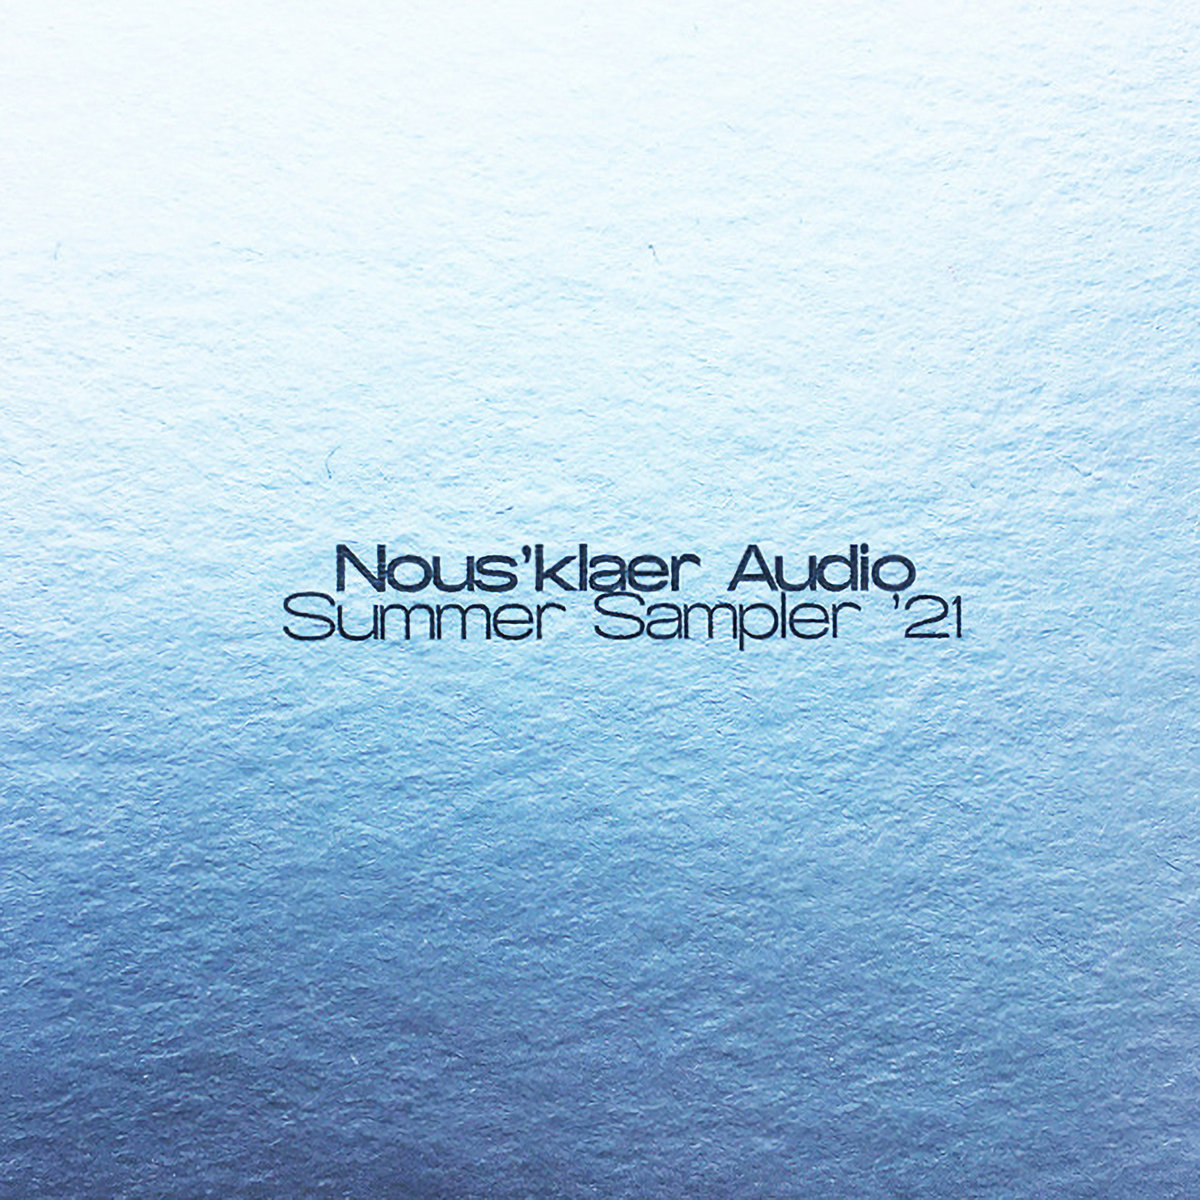 Nous'klaer Audio Summer Sampler '21 | Various Artists | Nous'klaer Audio